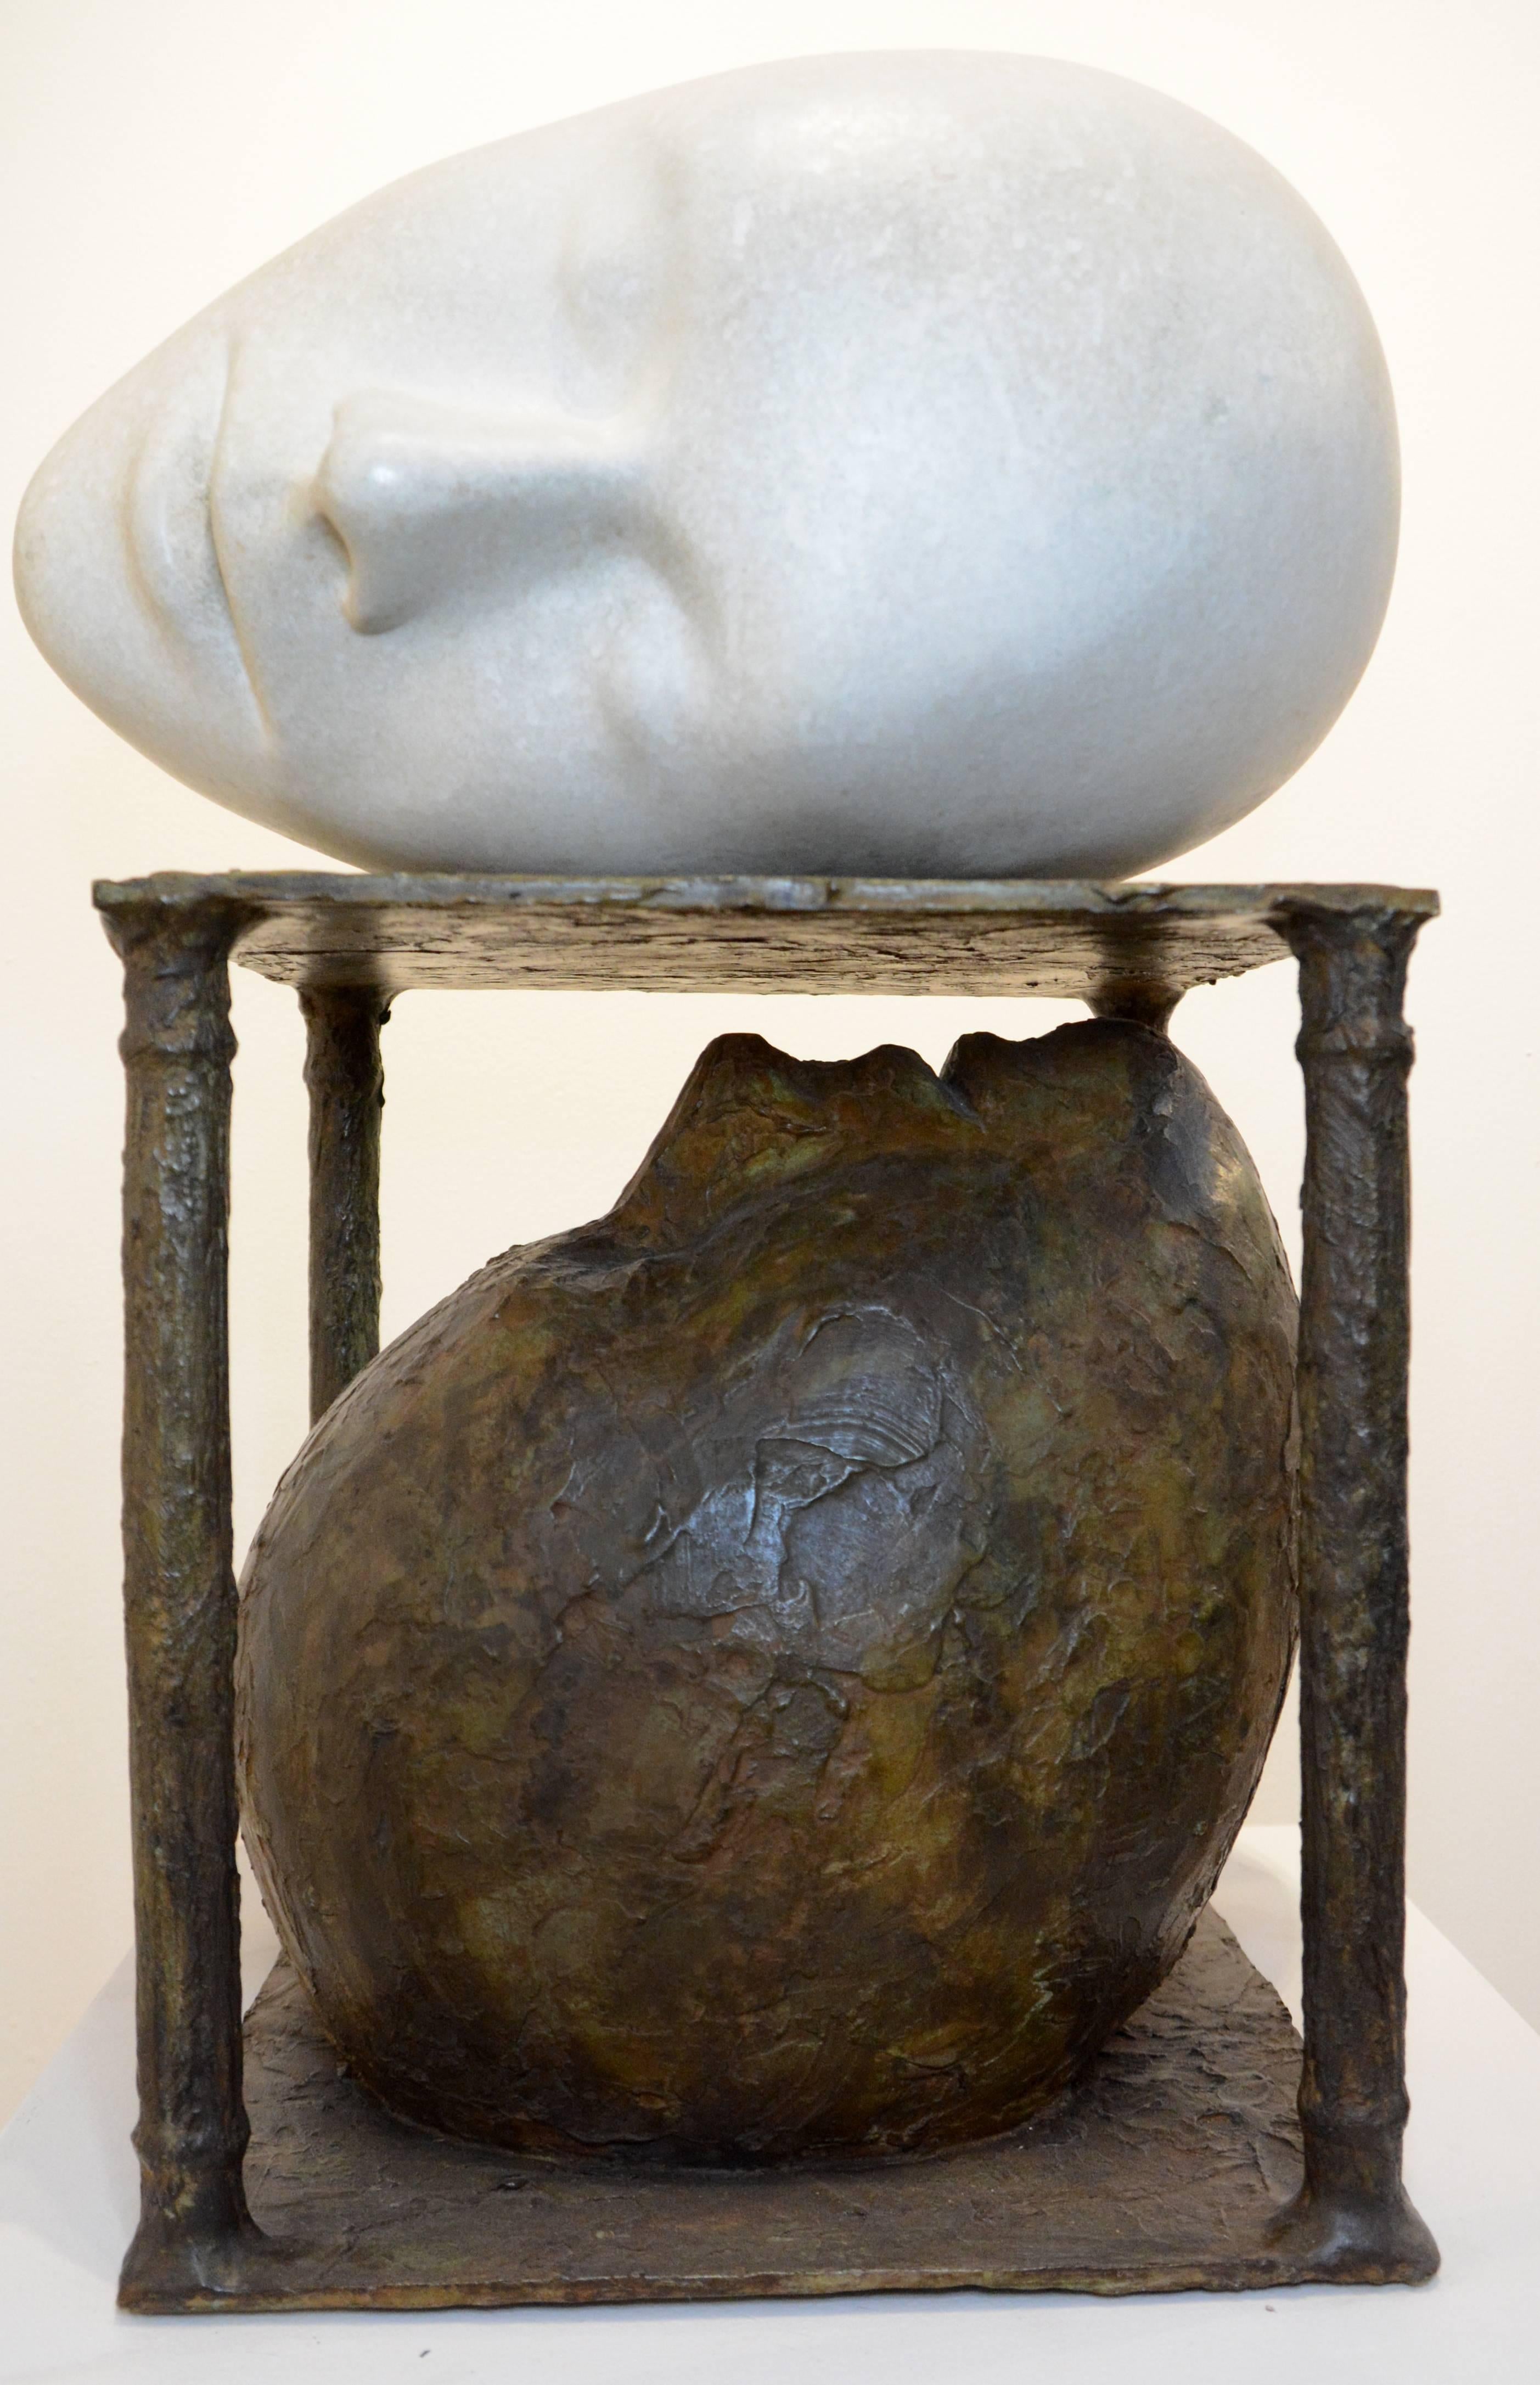 Dale Dunning Figurative Sculpture - Whisper 3/7 - human face, narrative, patinated bronze figurative sculpture